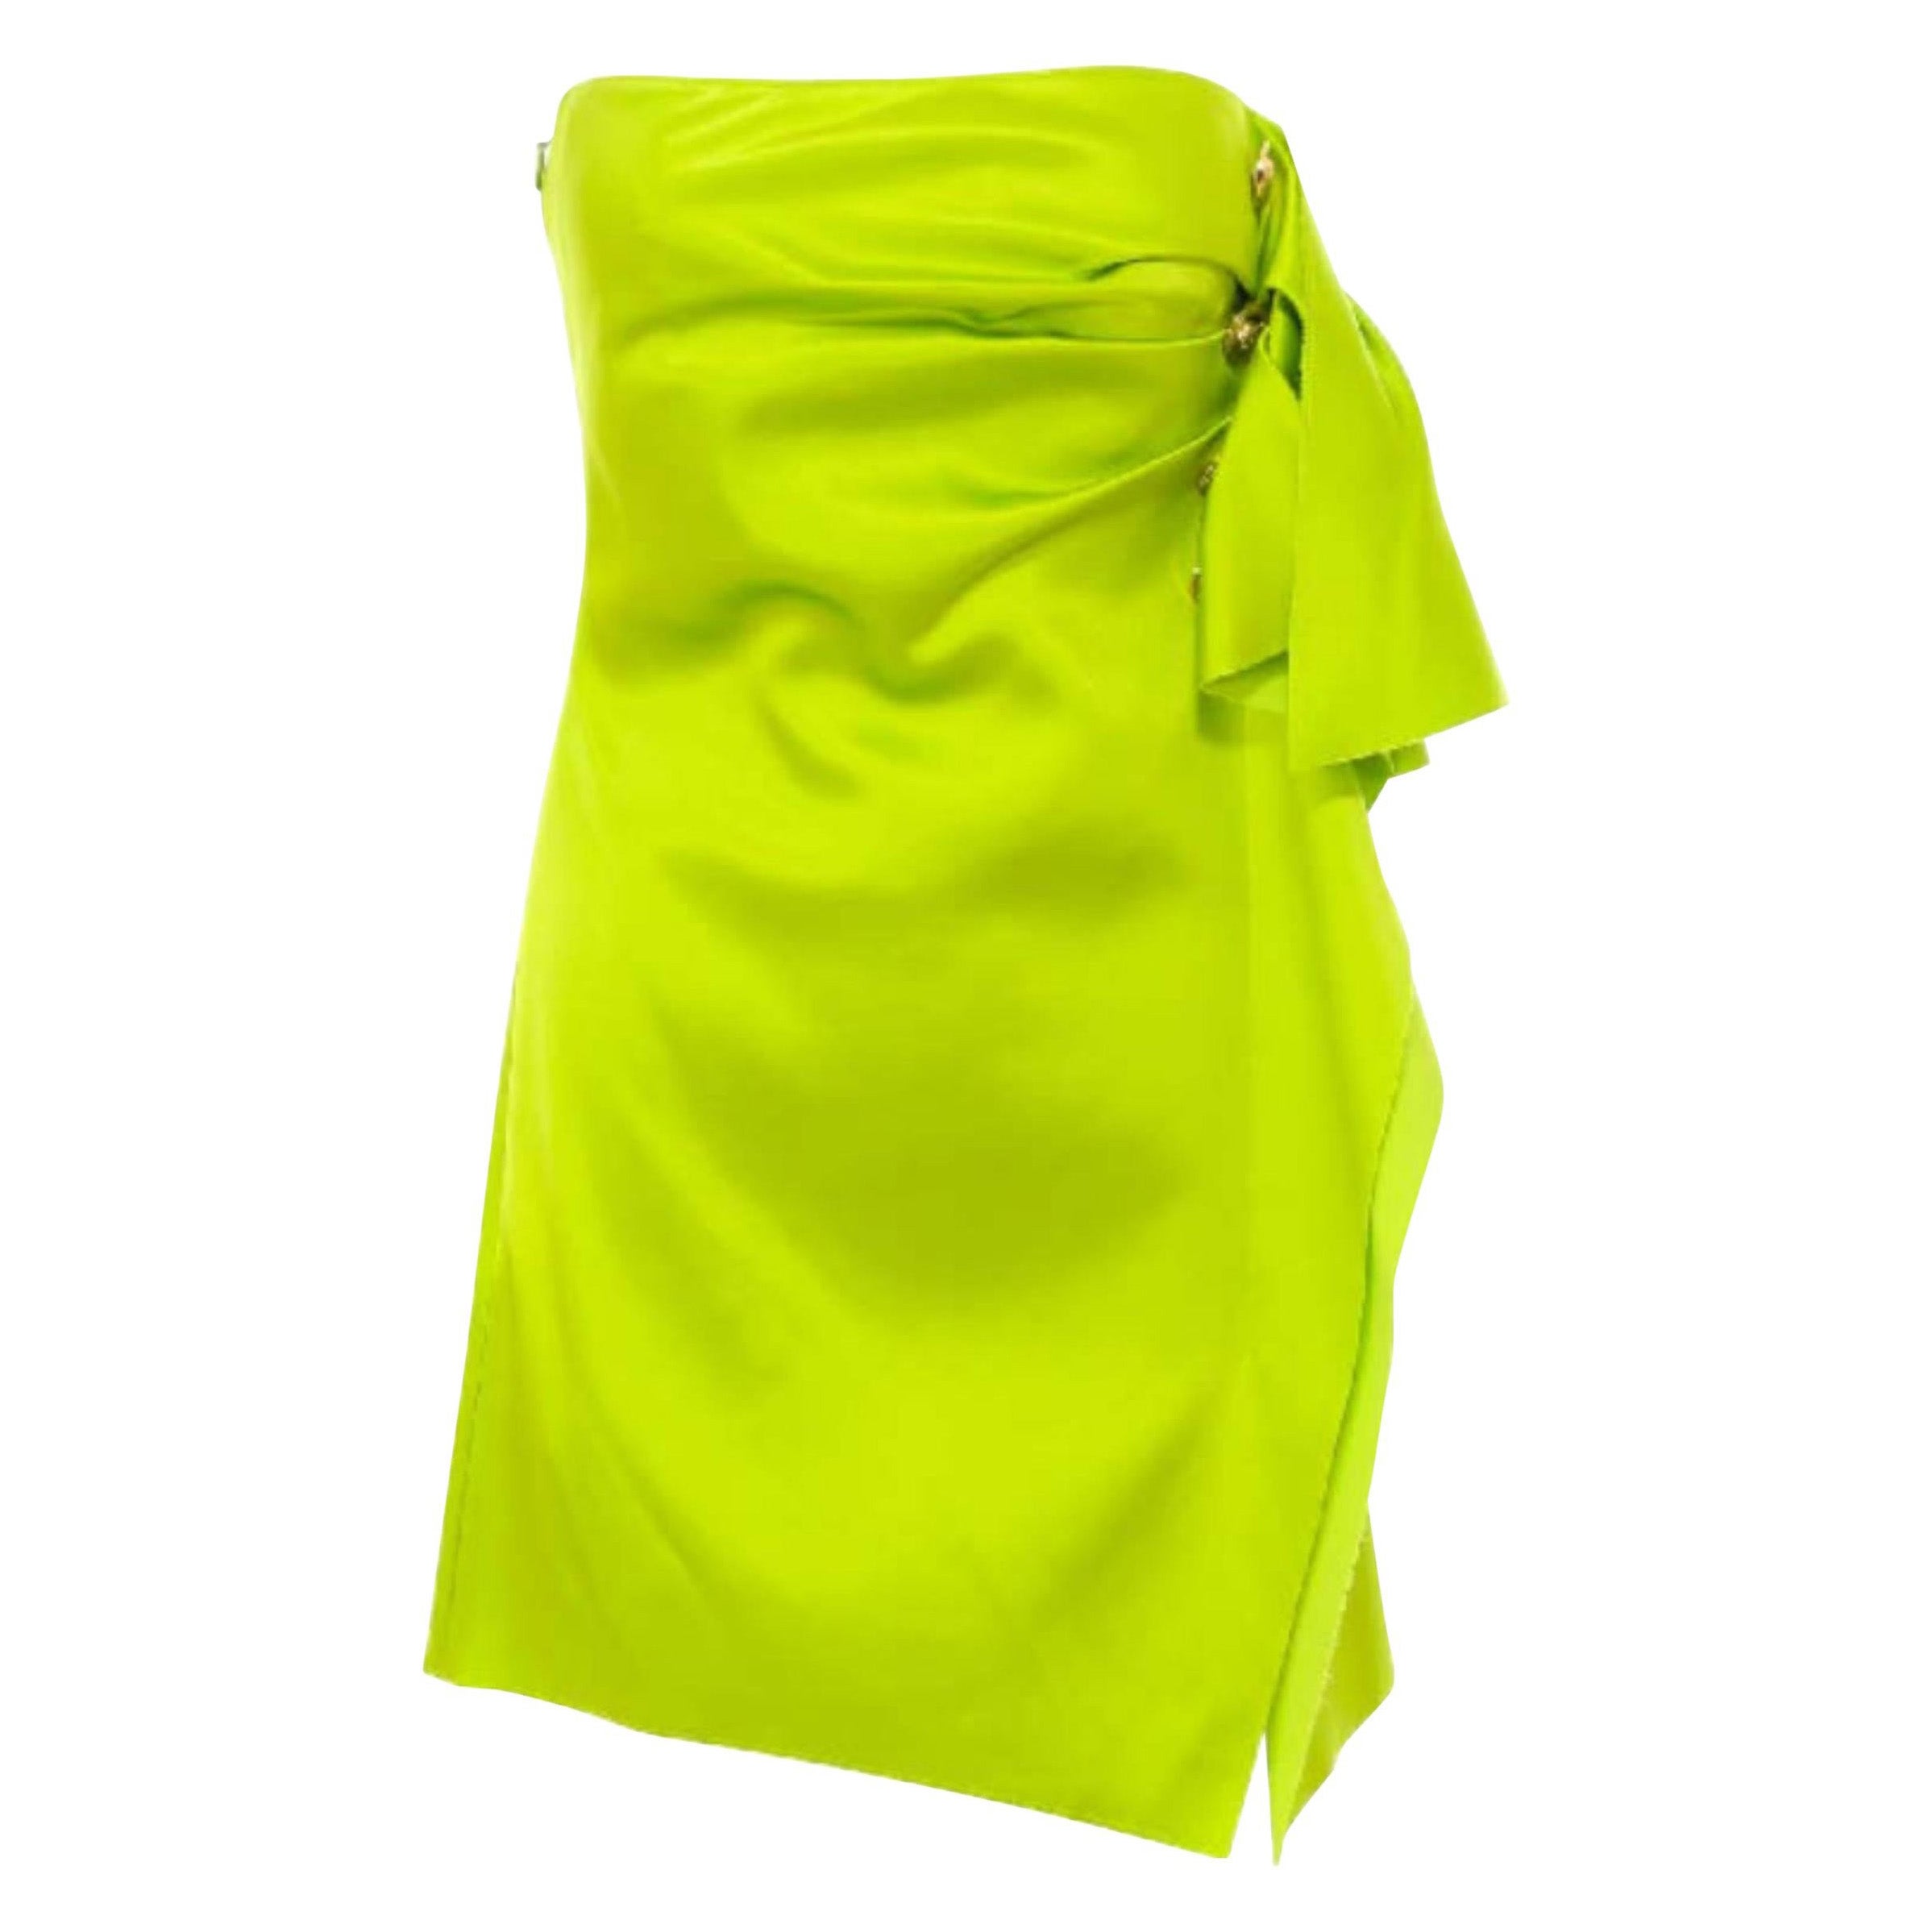 Printemps 2020 Look #42 LIME SATIN STRAPLESS DRESS as seen as Seen 40 - 4 en vente